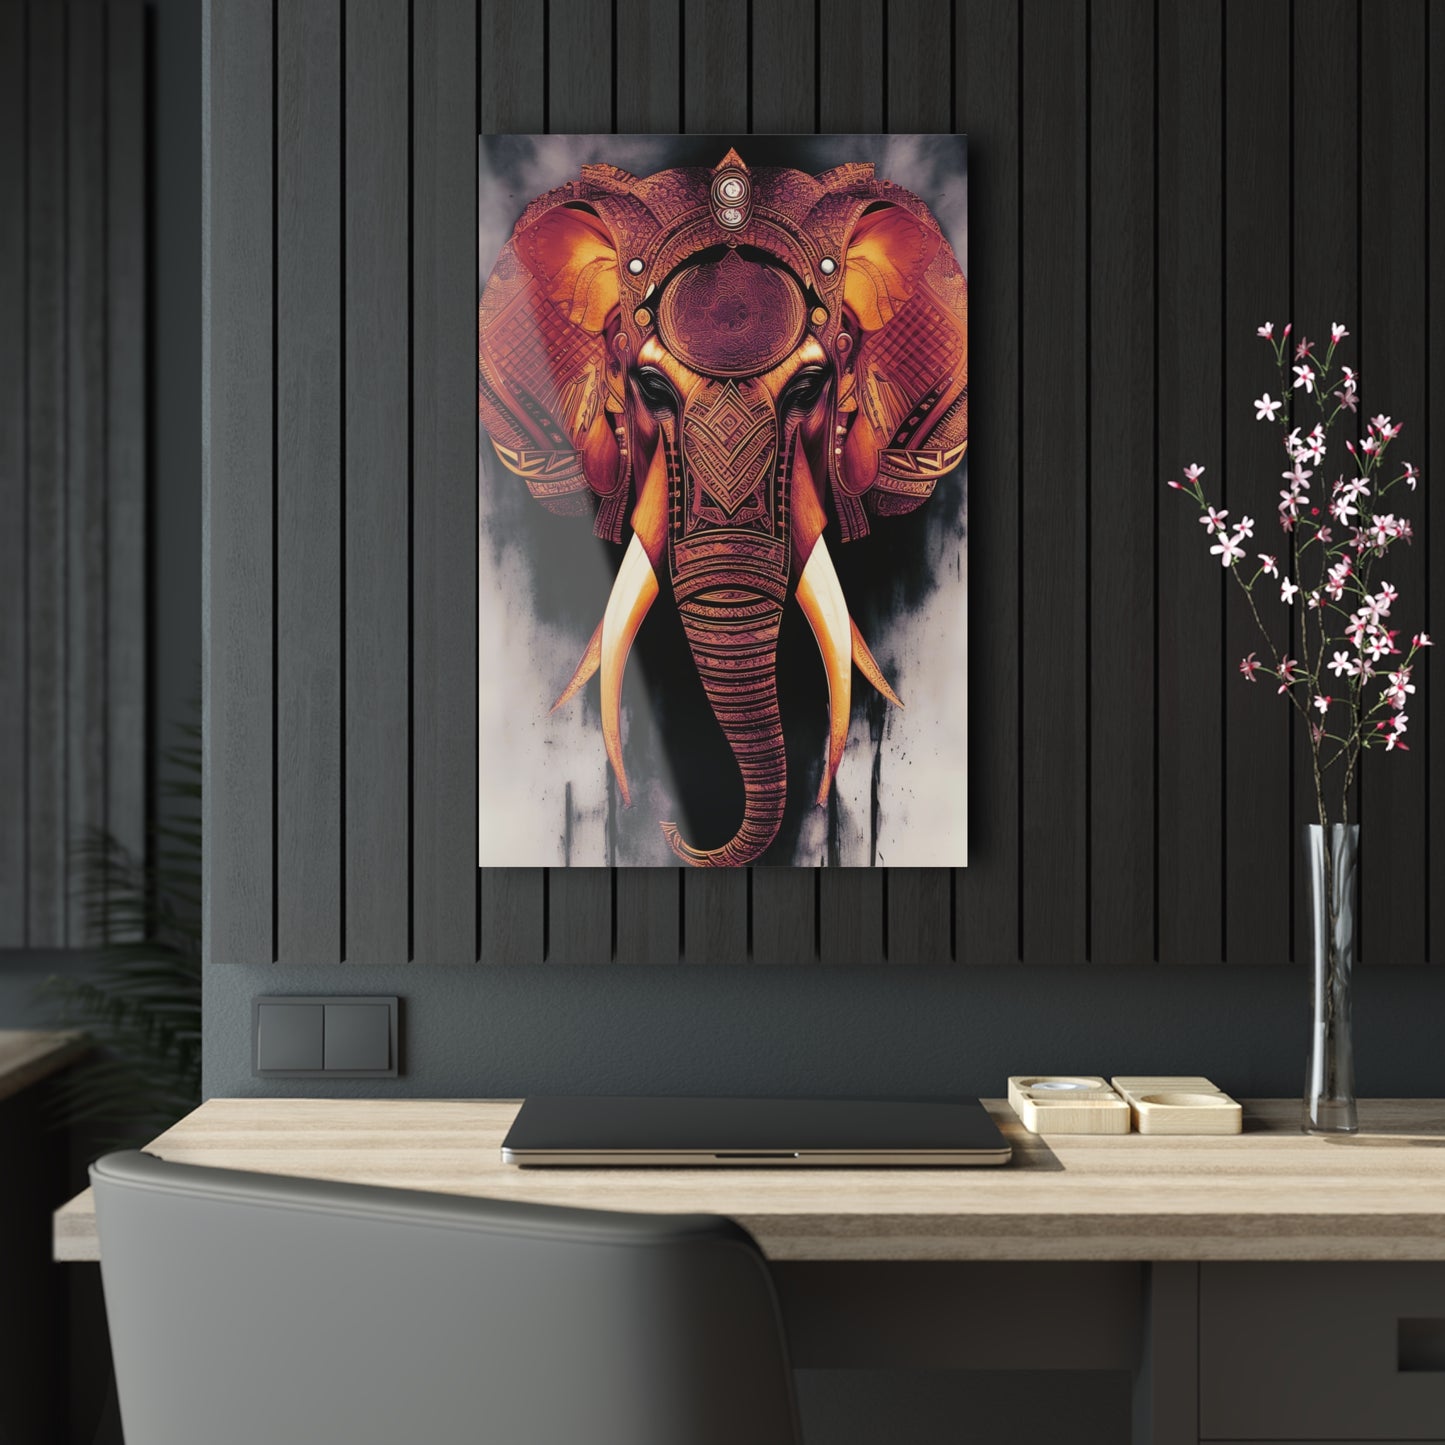 Elephant Themed Modern Wall Art - Copper and Gold Tribal Elephant Head on a Crystal Clear Acrylic Panel 20x30 hung on dark wall